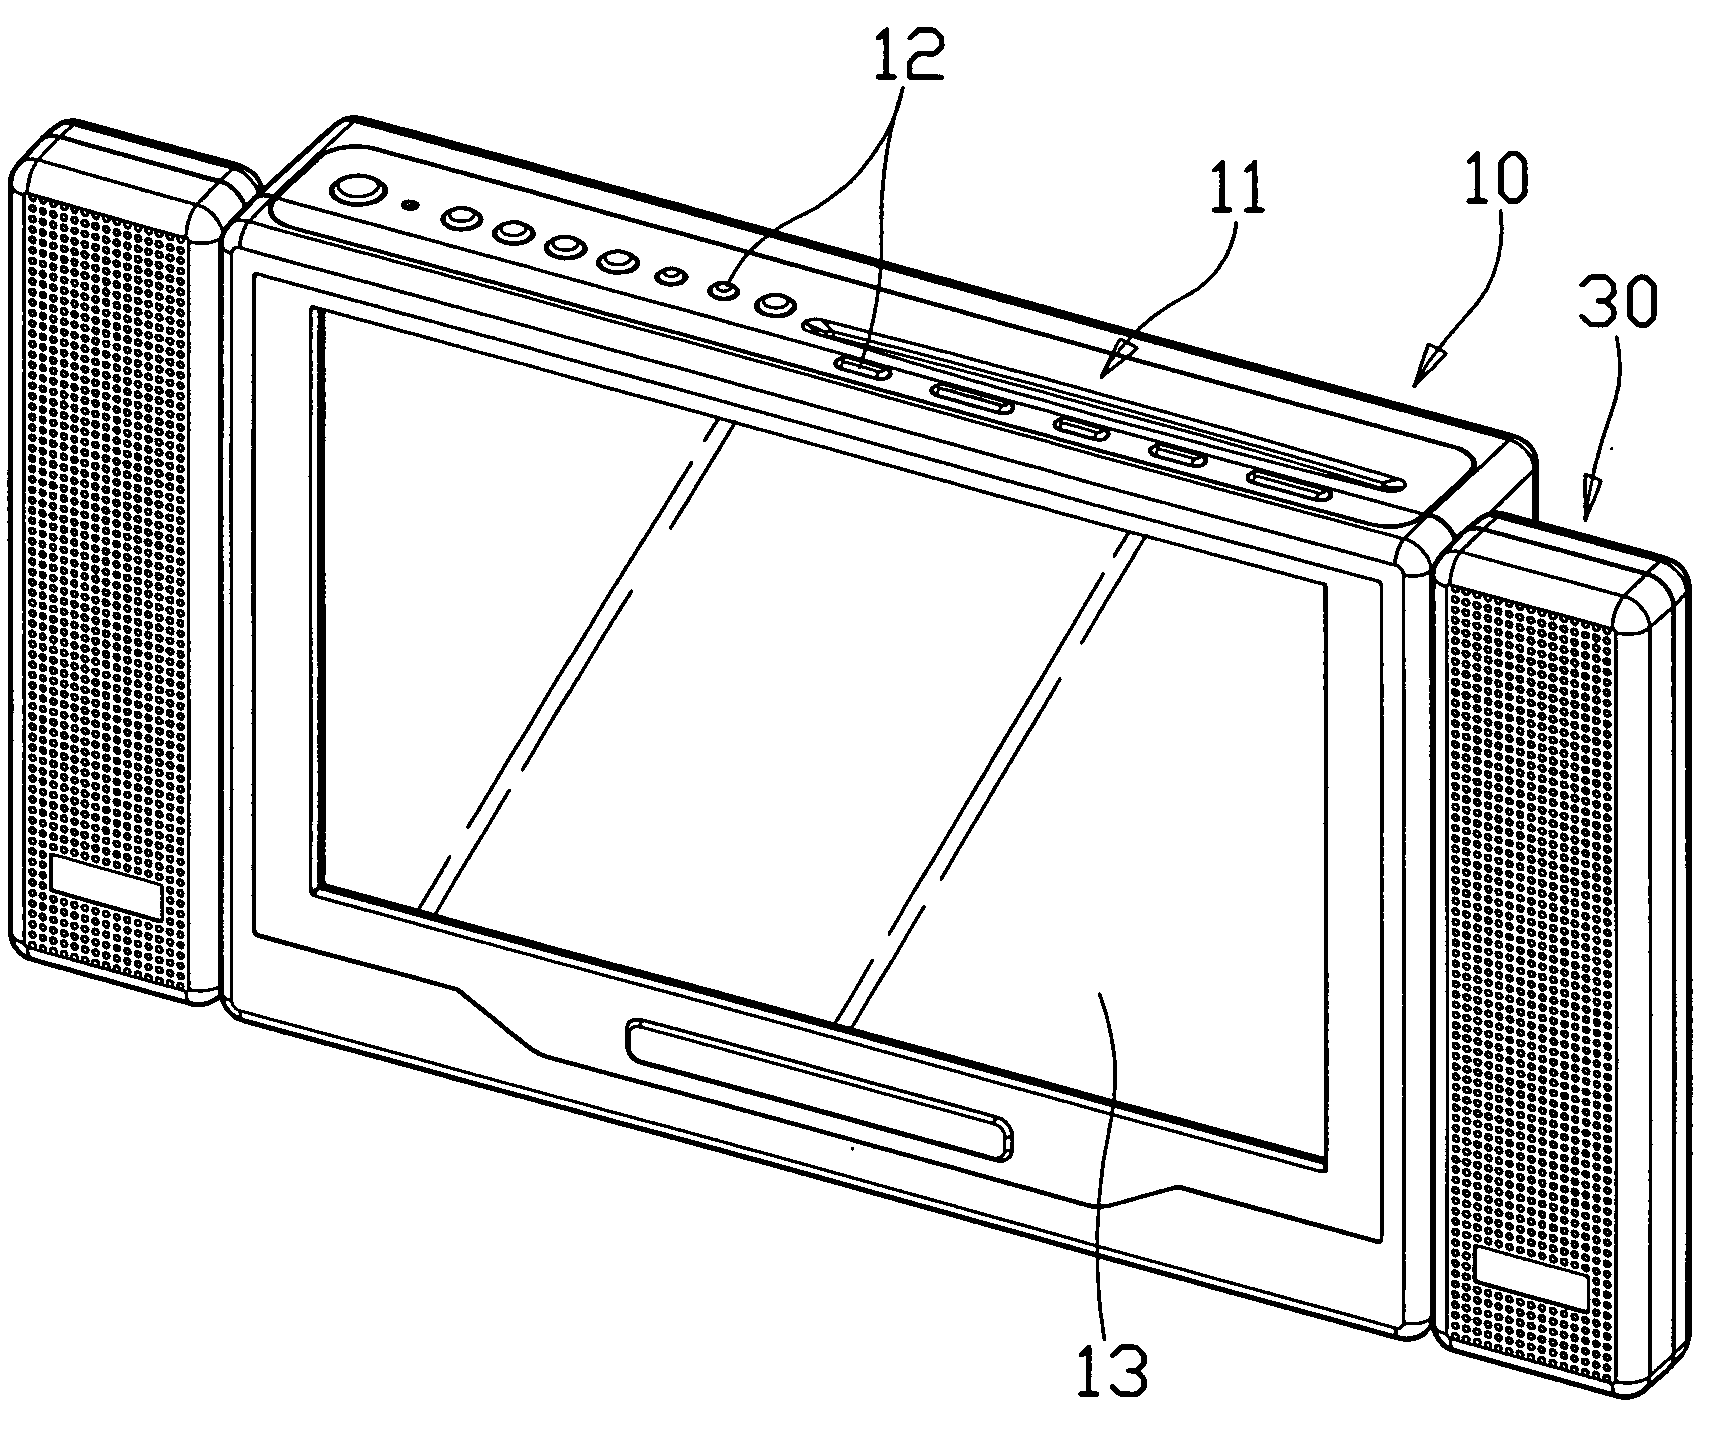 LCD and speaker arrangement